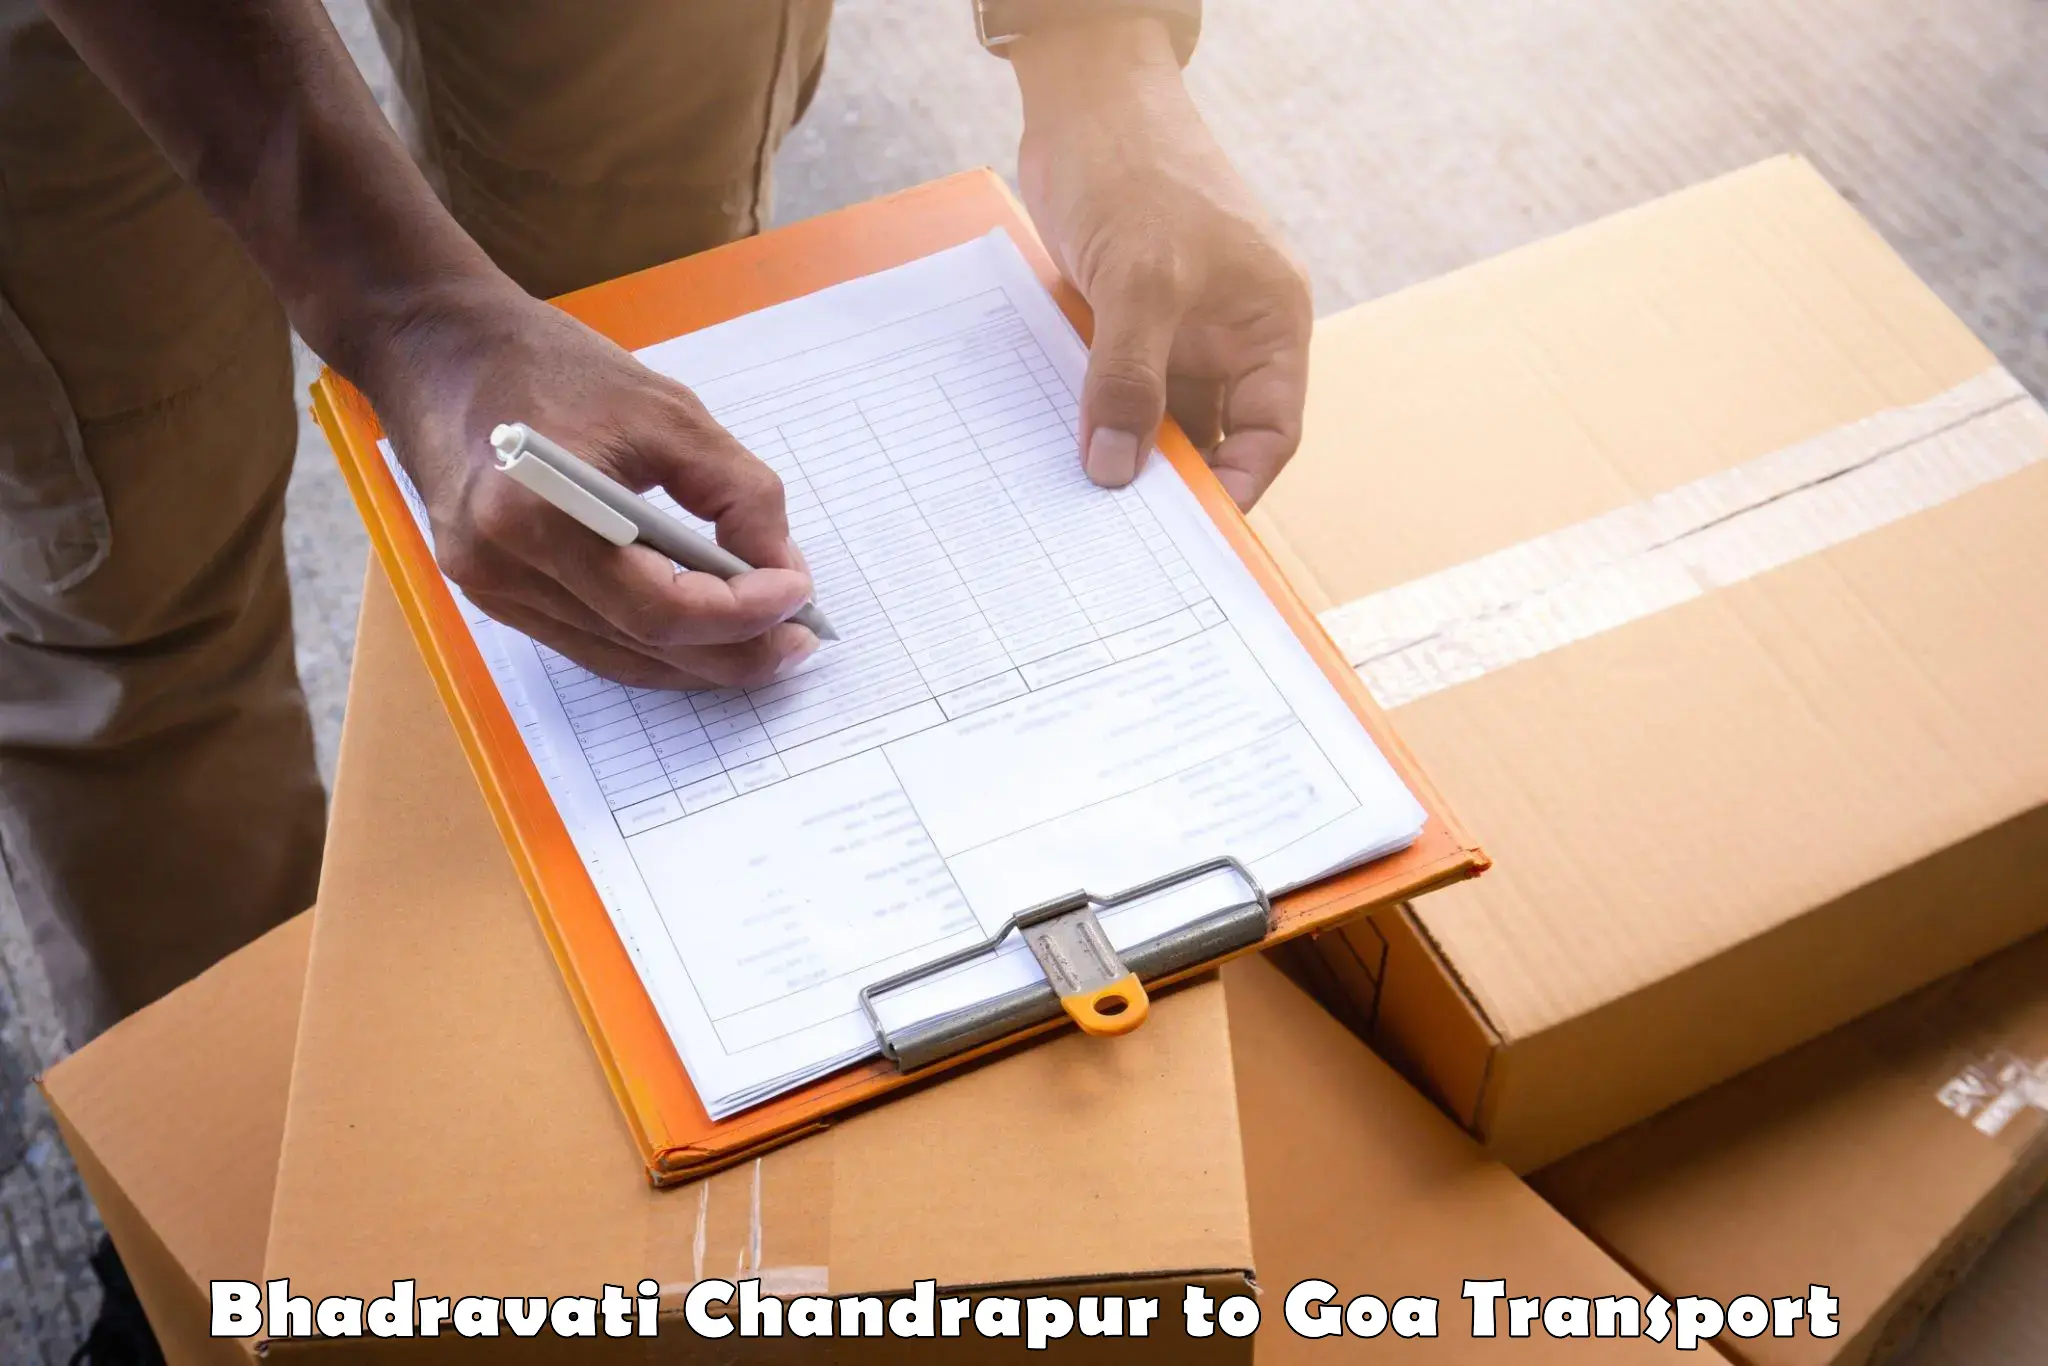 Furniture transport service Bhadravati Chandrapur to Goa